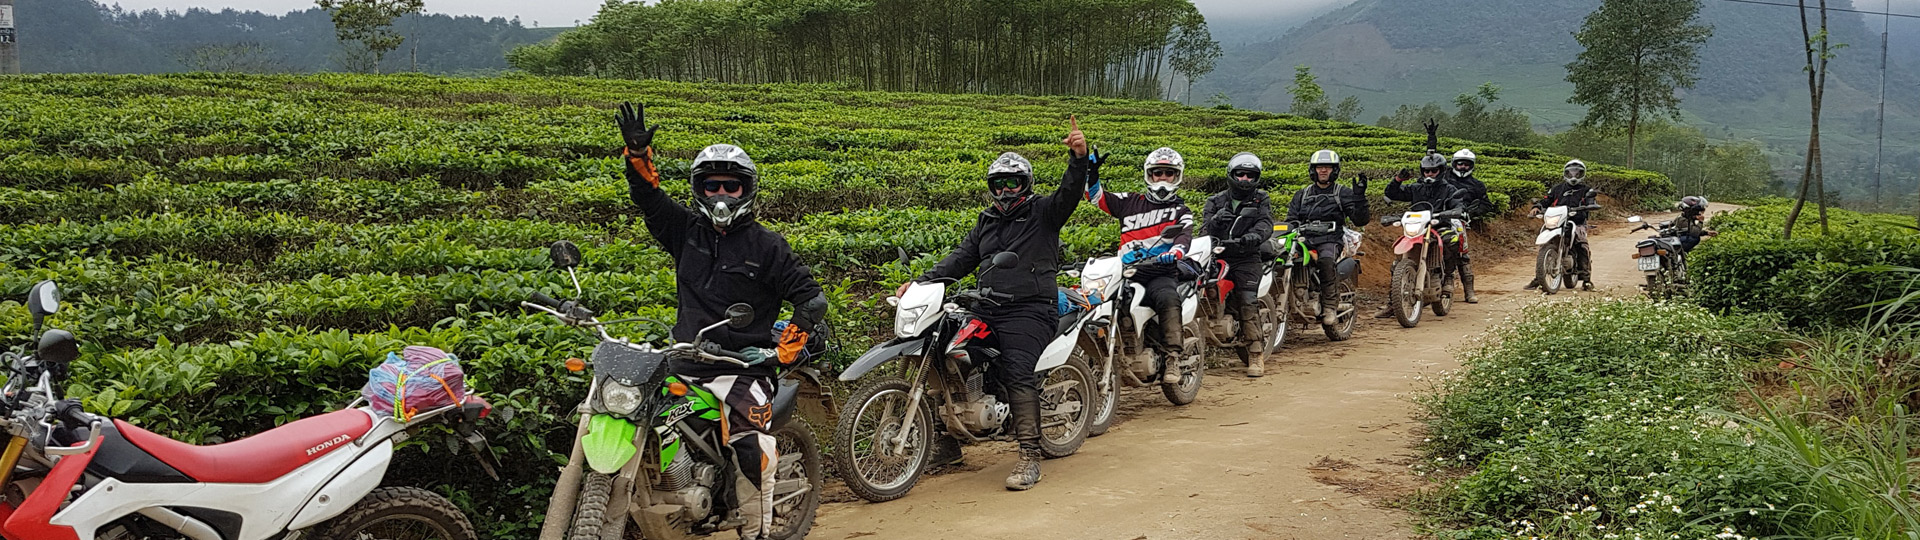 Myanmar Motorcycle Tours 6